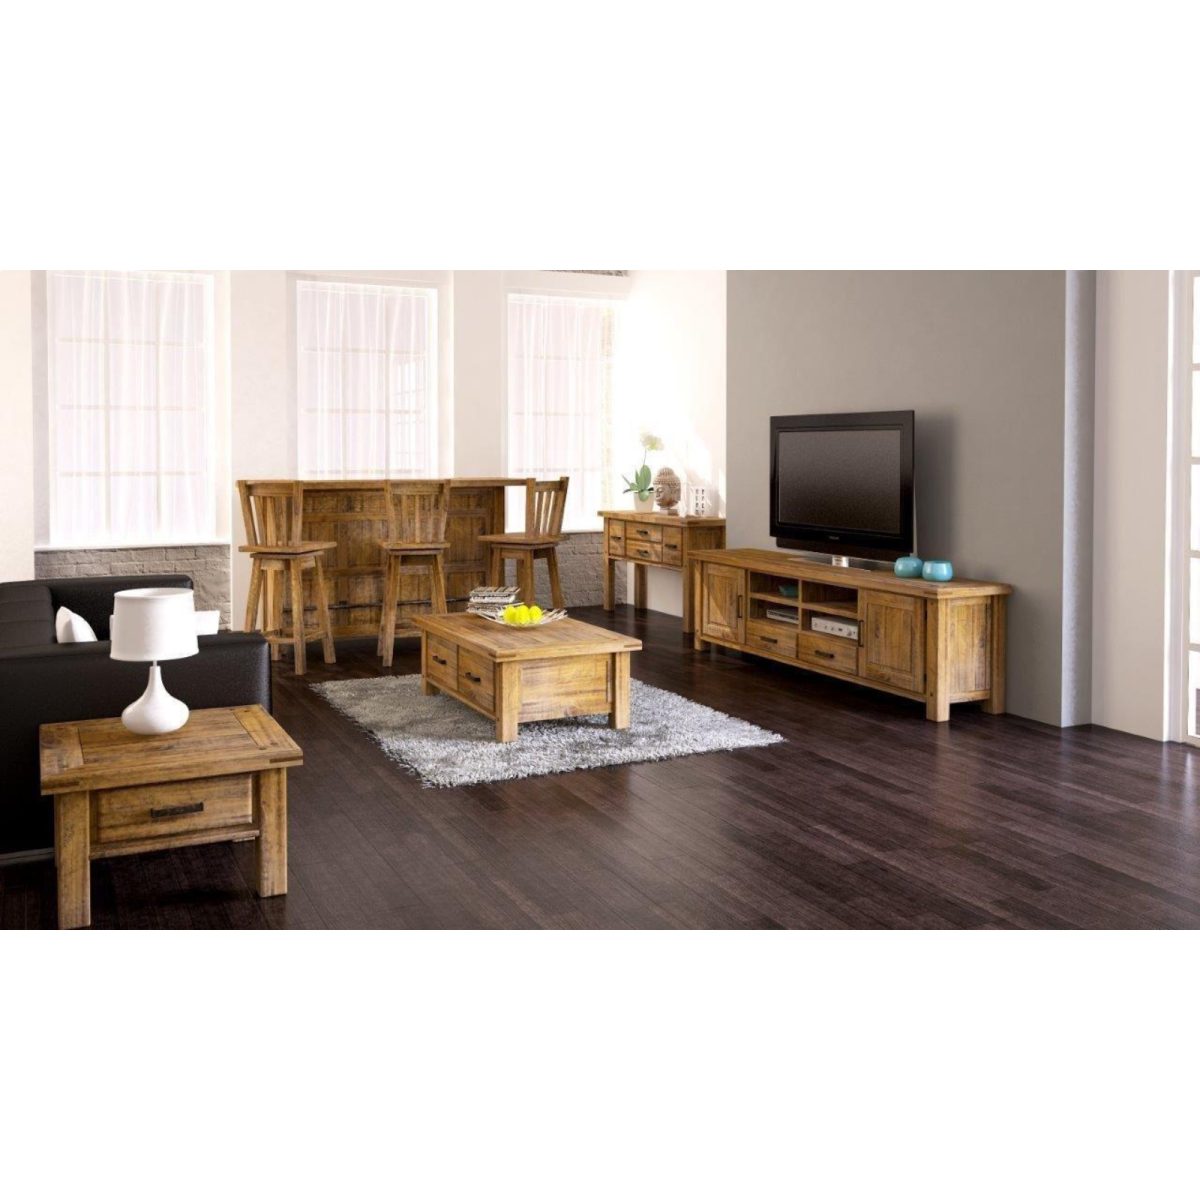 Teasel ETU Entertainment TV Unit 180cm 2 Door Solid Pine Wood – Rustic Oak